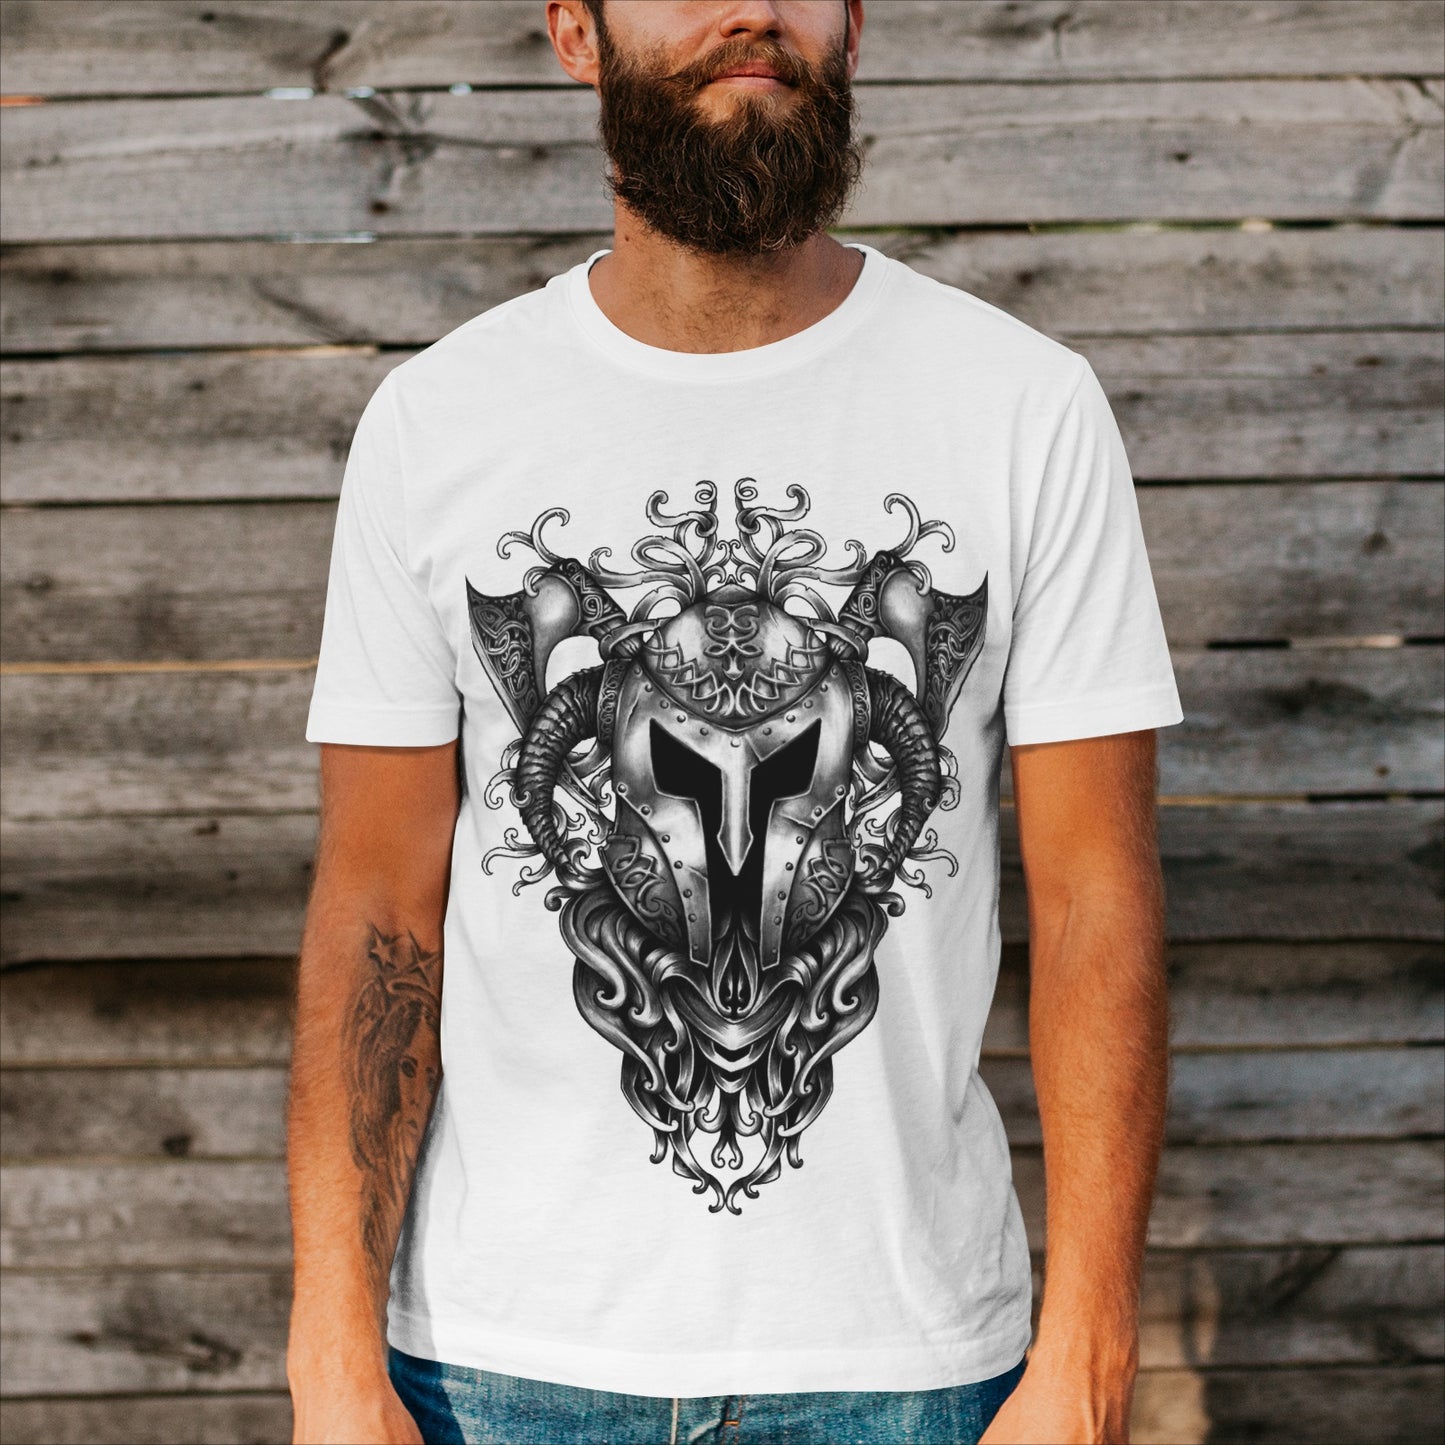 The Armor of Viking T-Shirt DromedarShop.com Online Boutique